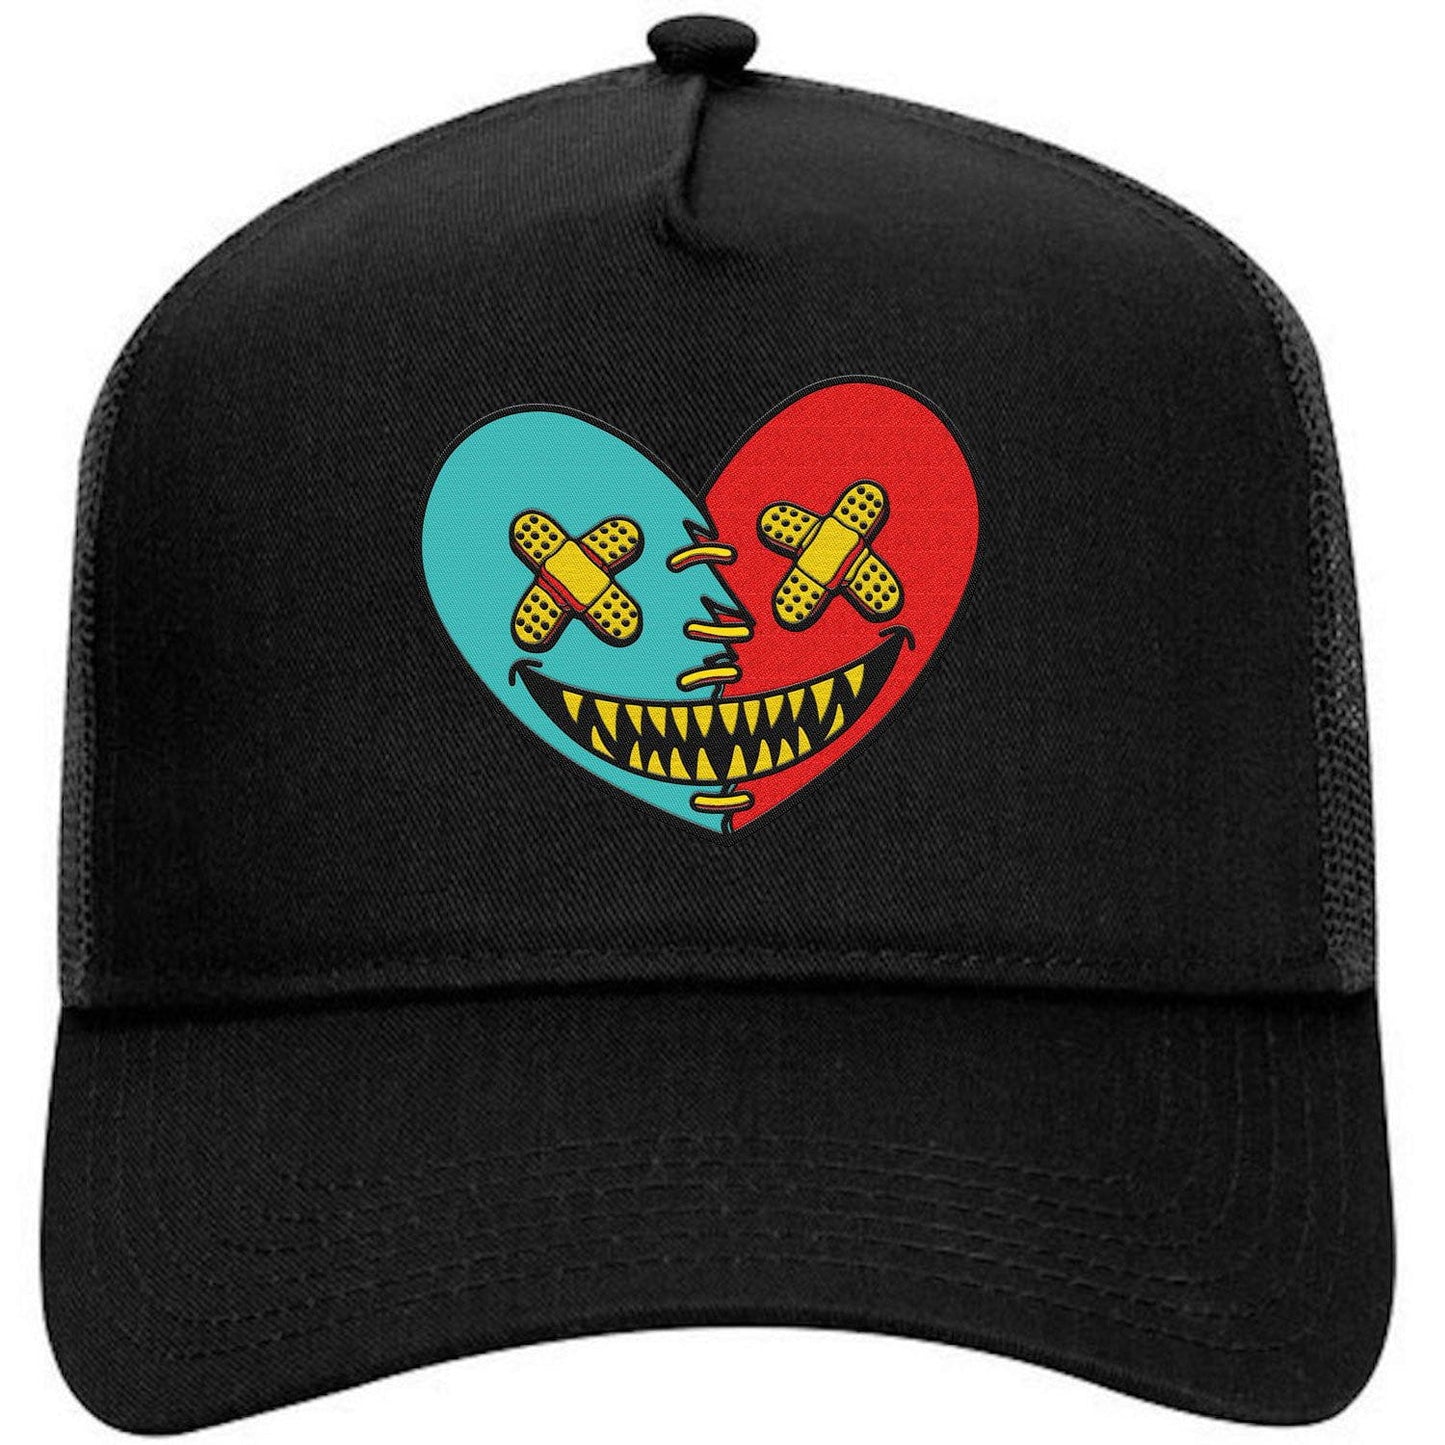 Kobe 8 Venice Beach 8s Trucker Hats - Venice Heart Baws